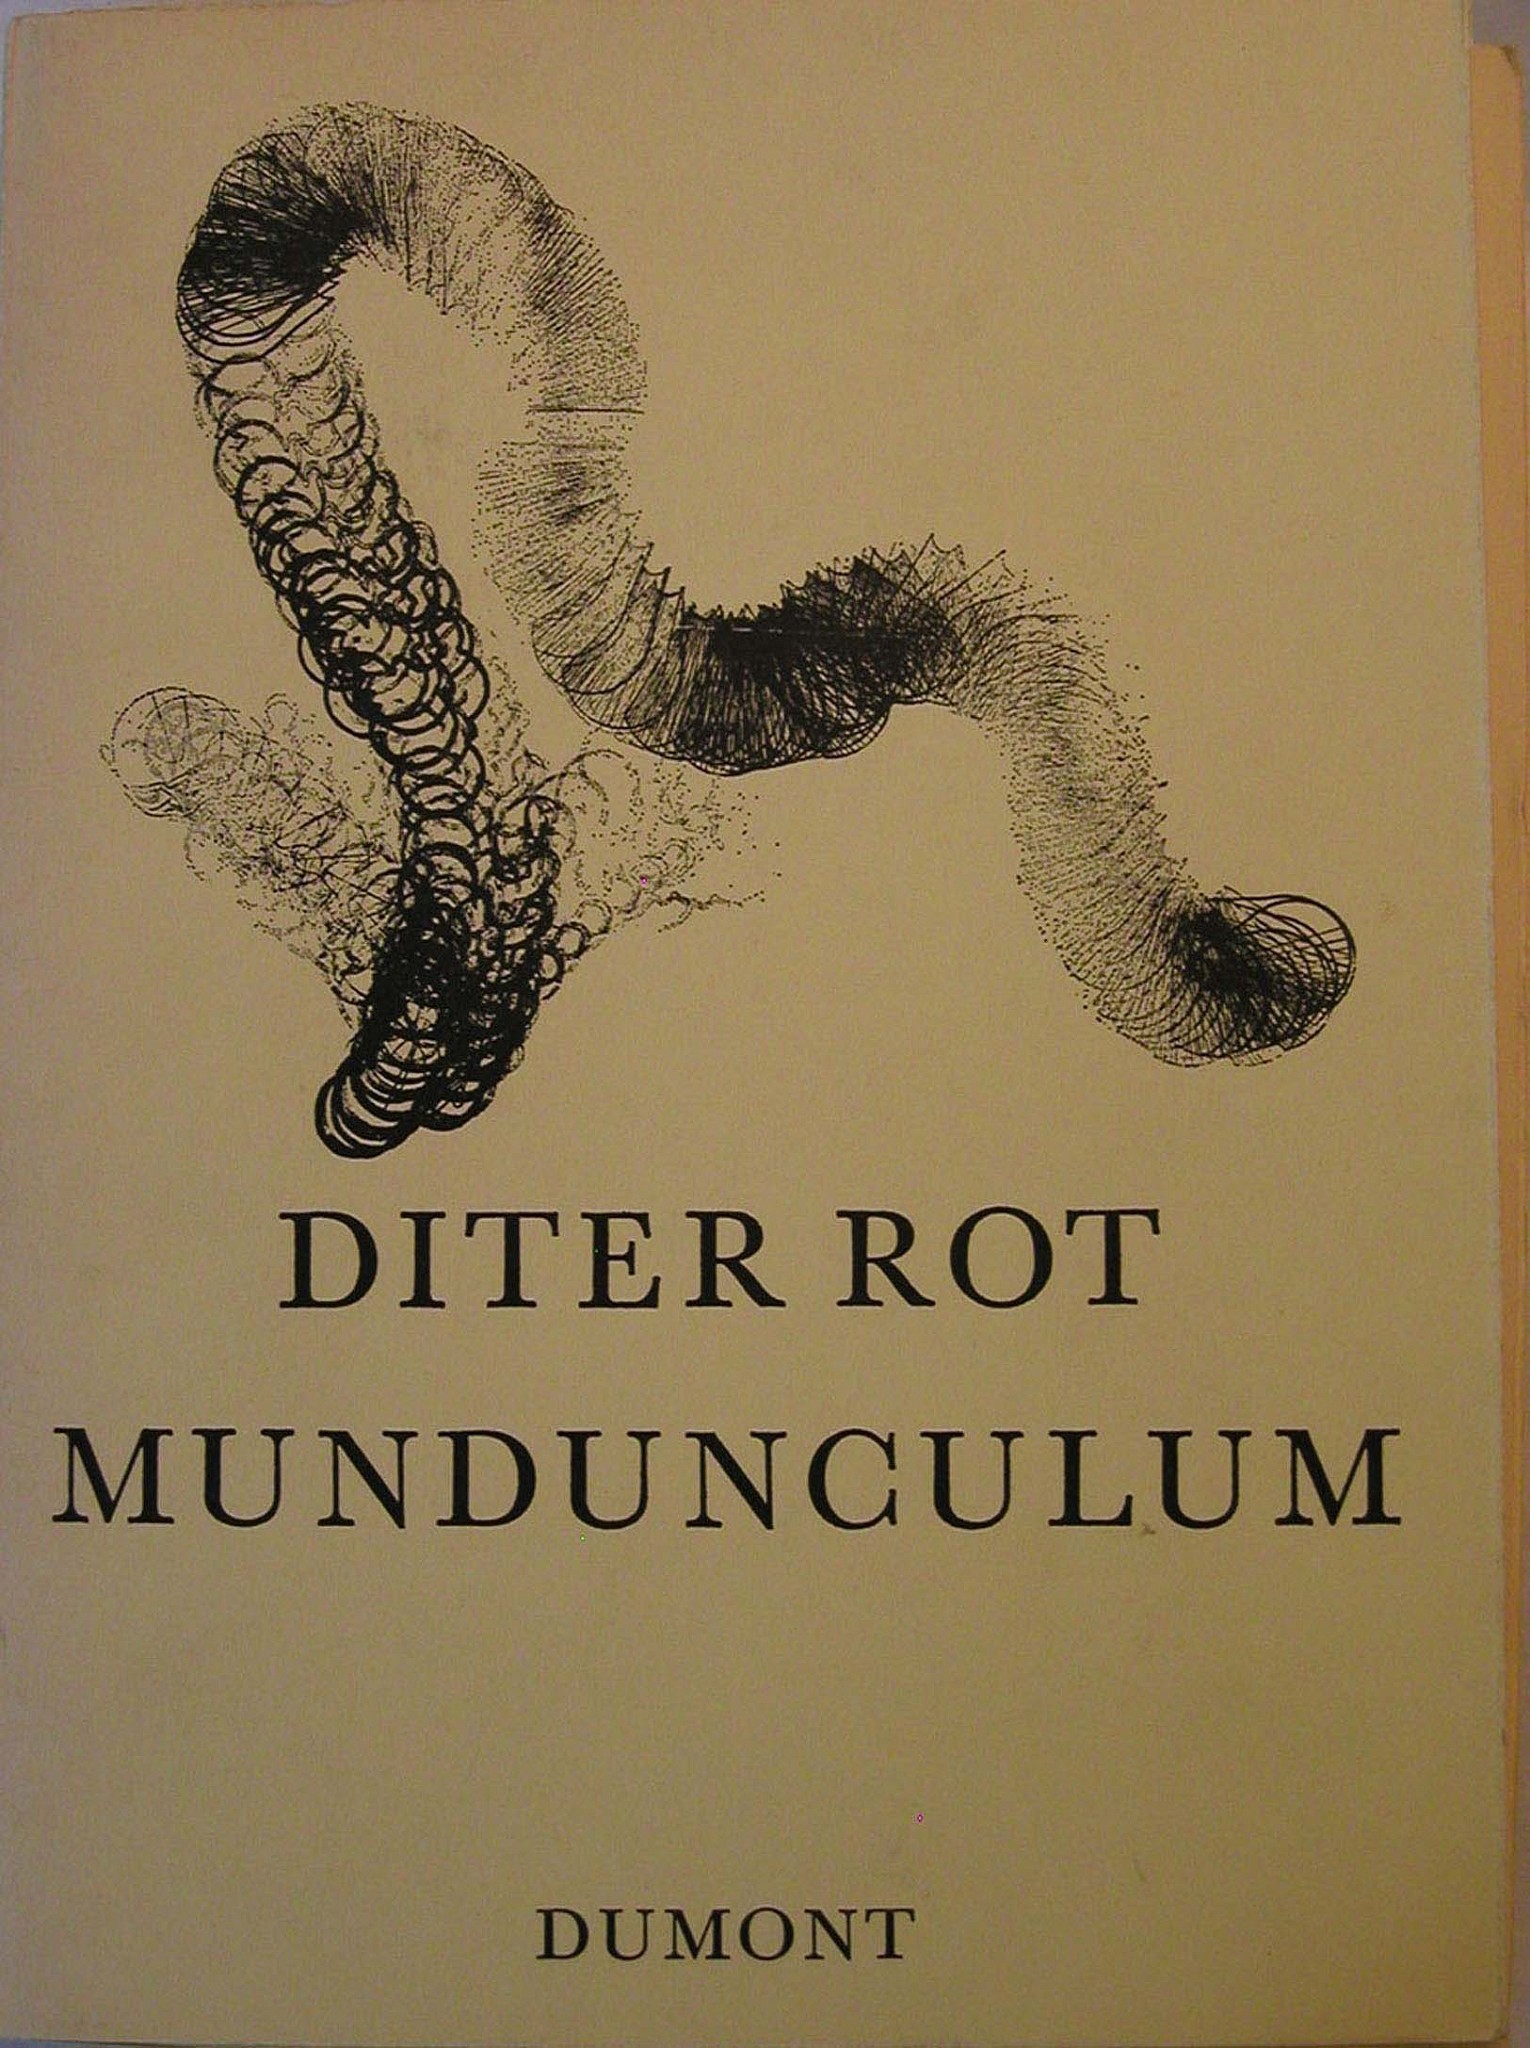 Dieter Roth | Daily Mirror Book | 1962 | Zucker Art Books